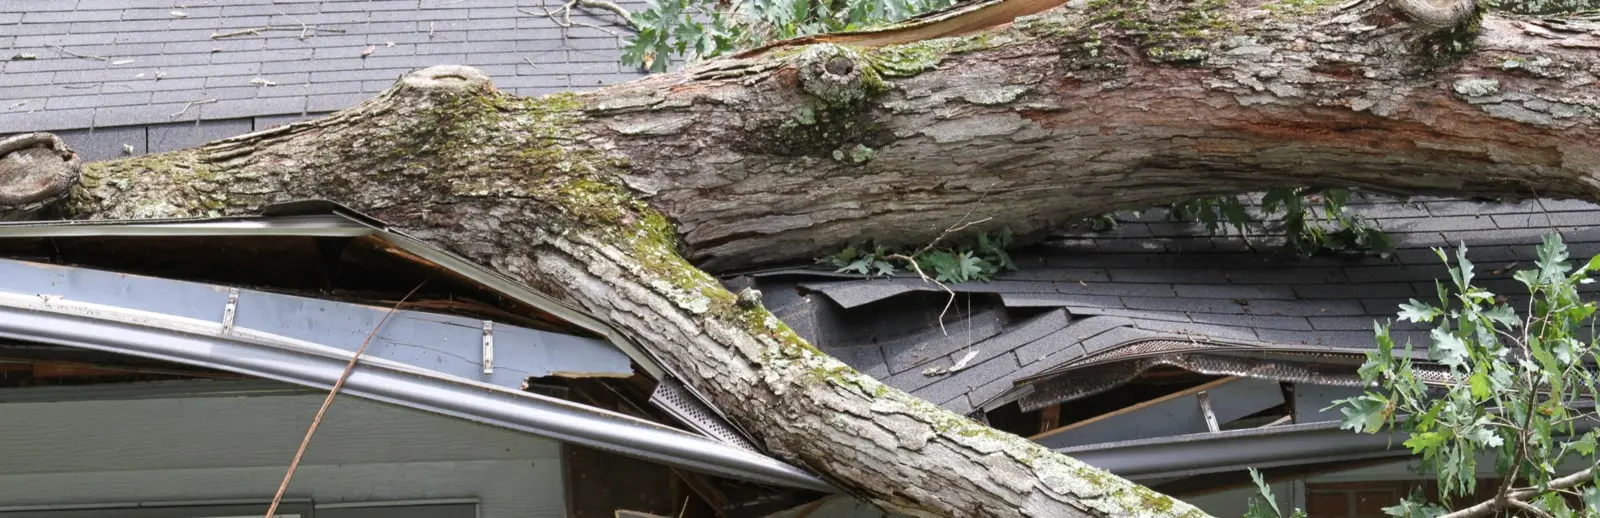 emergency roof repair after storm damage in Prattville AL